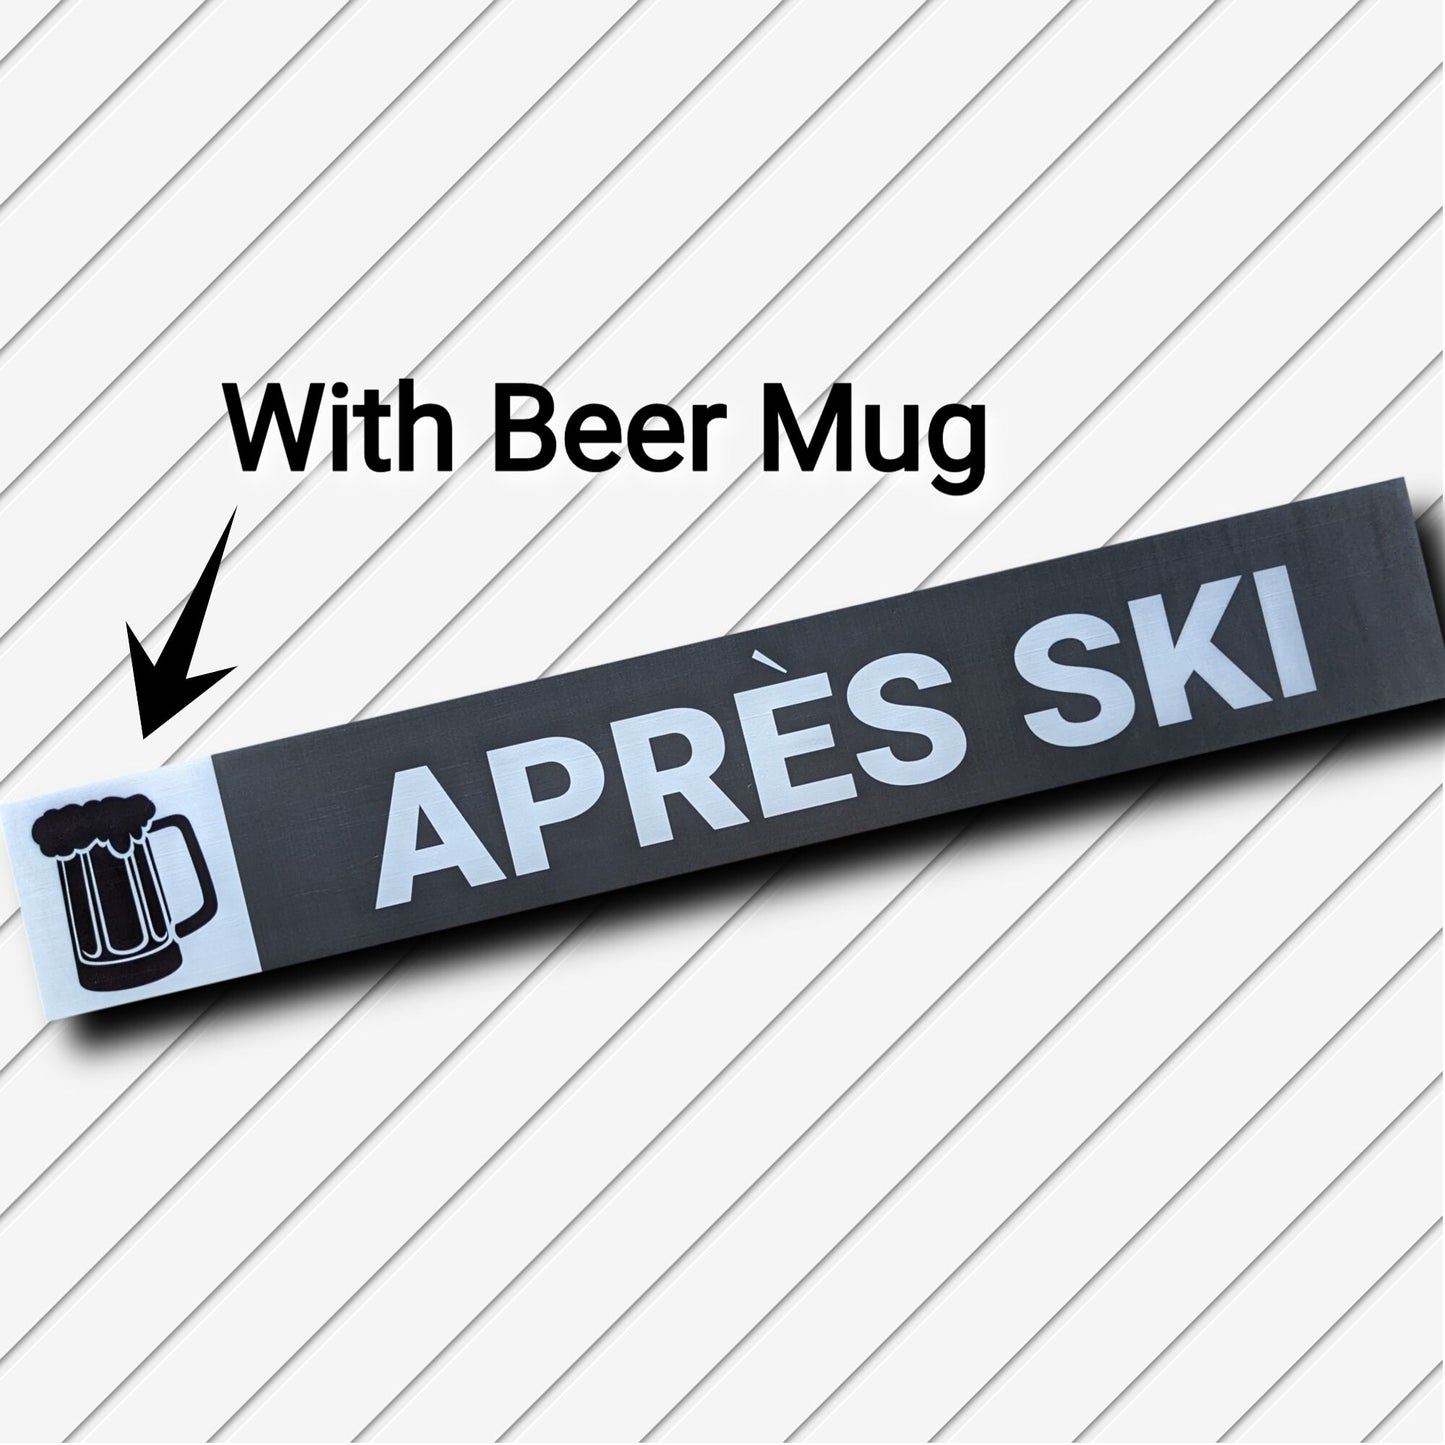 Apres Ski Sign, ski trail sign, bar sign, pub sign, ski decor, skiing gifts, cabin decor, ski resort, lodge sign